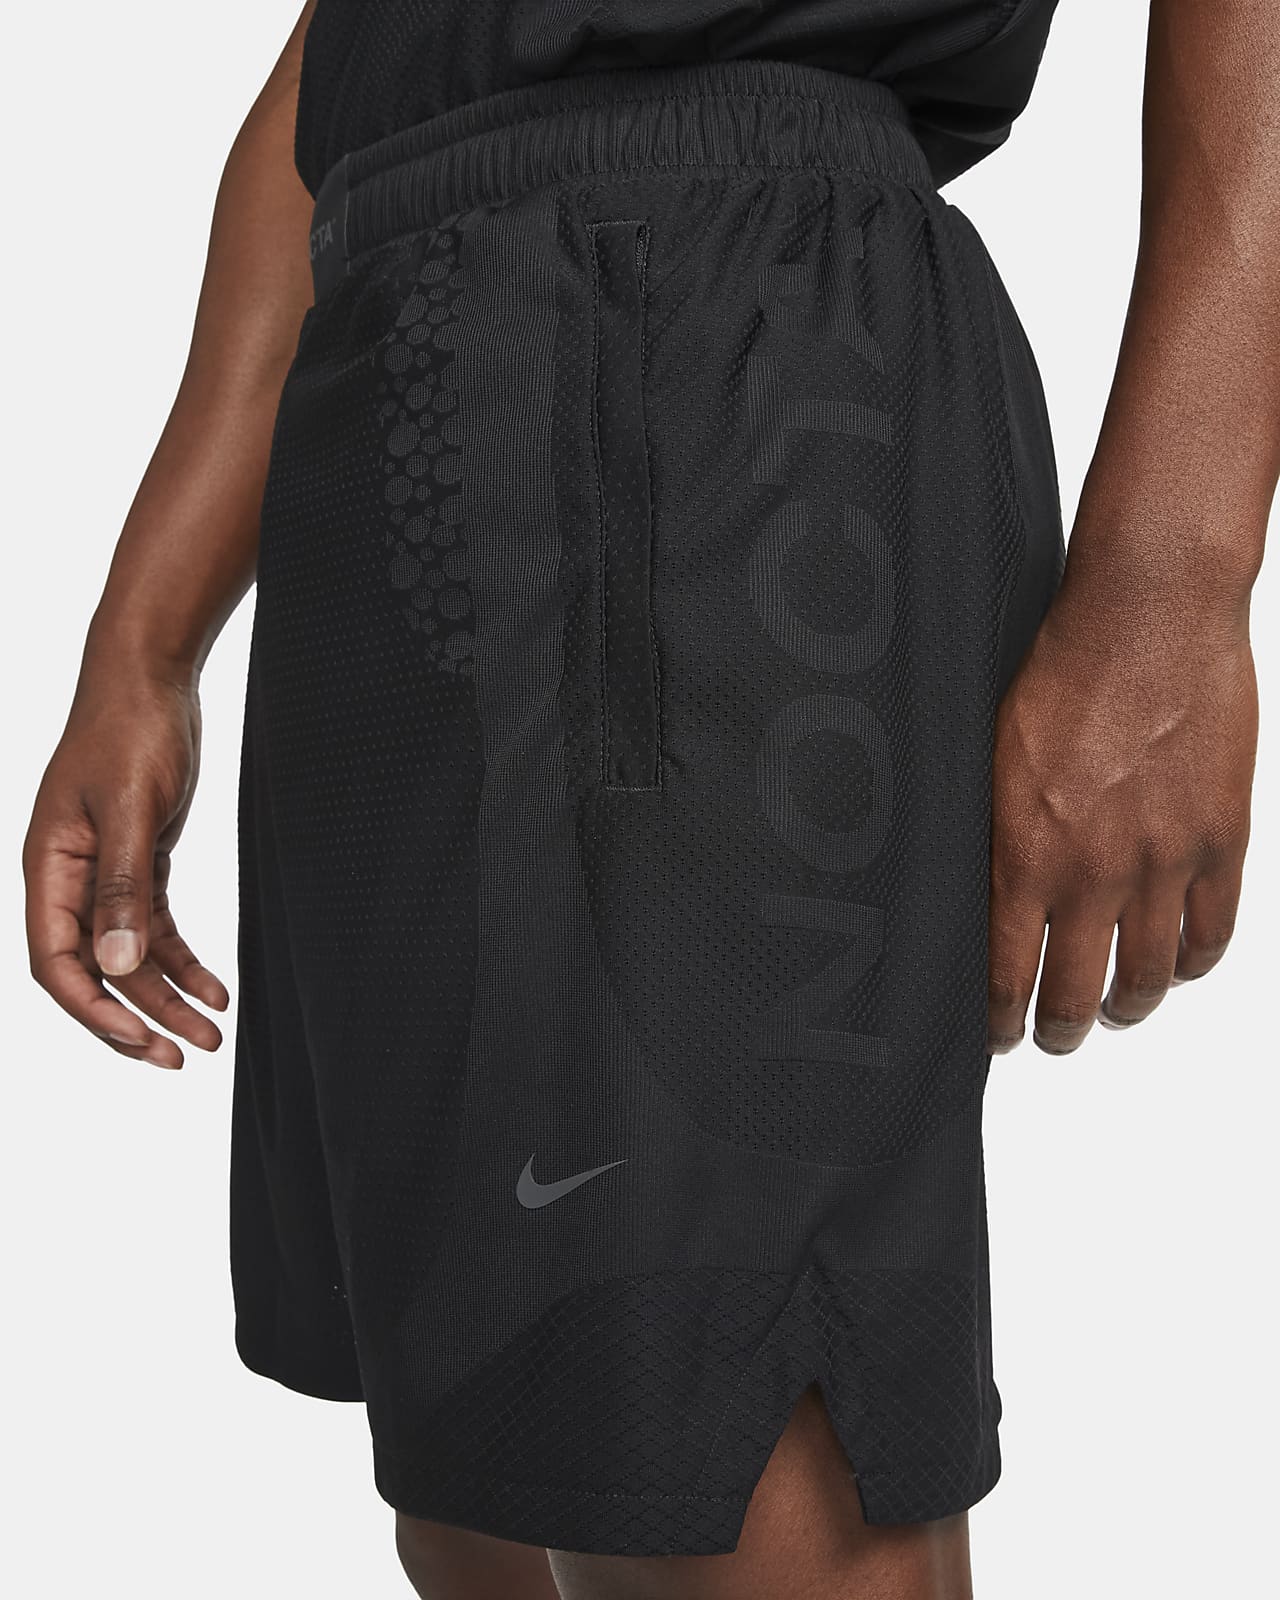 NOCTA Men's Basketball Nike.com